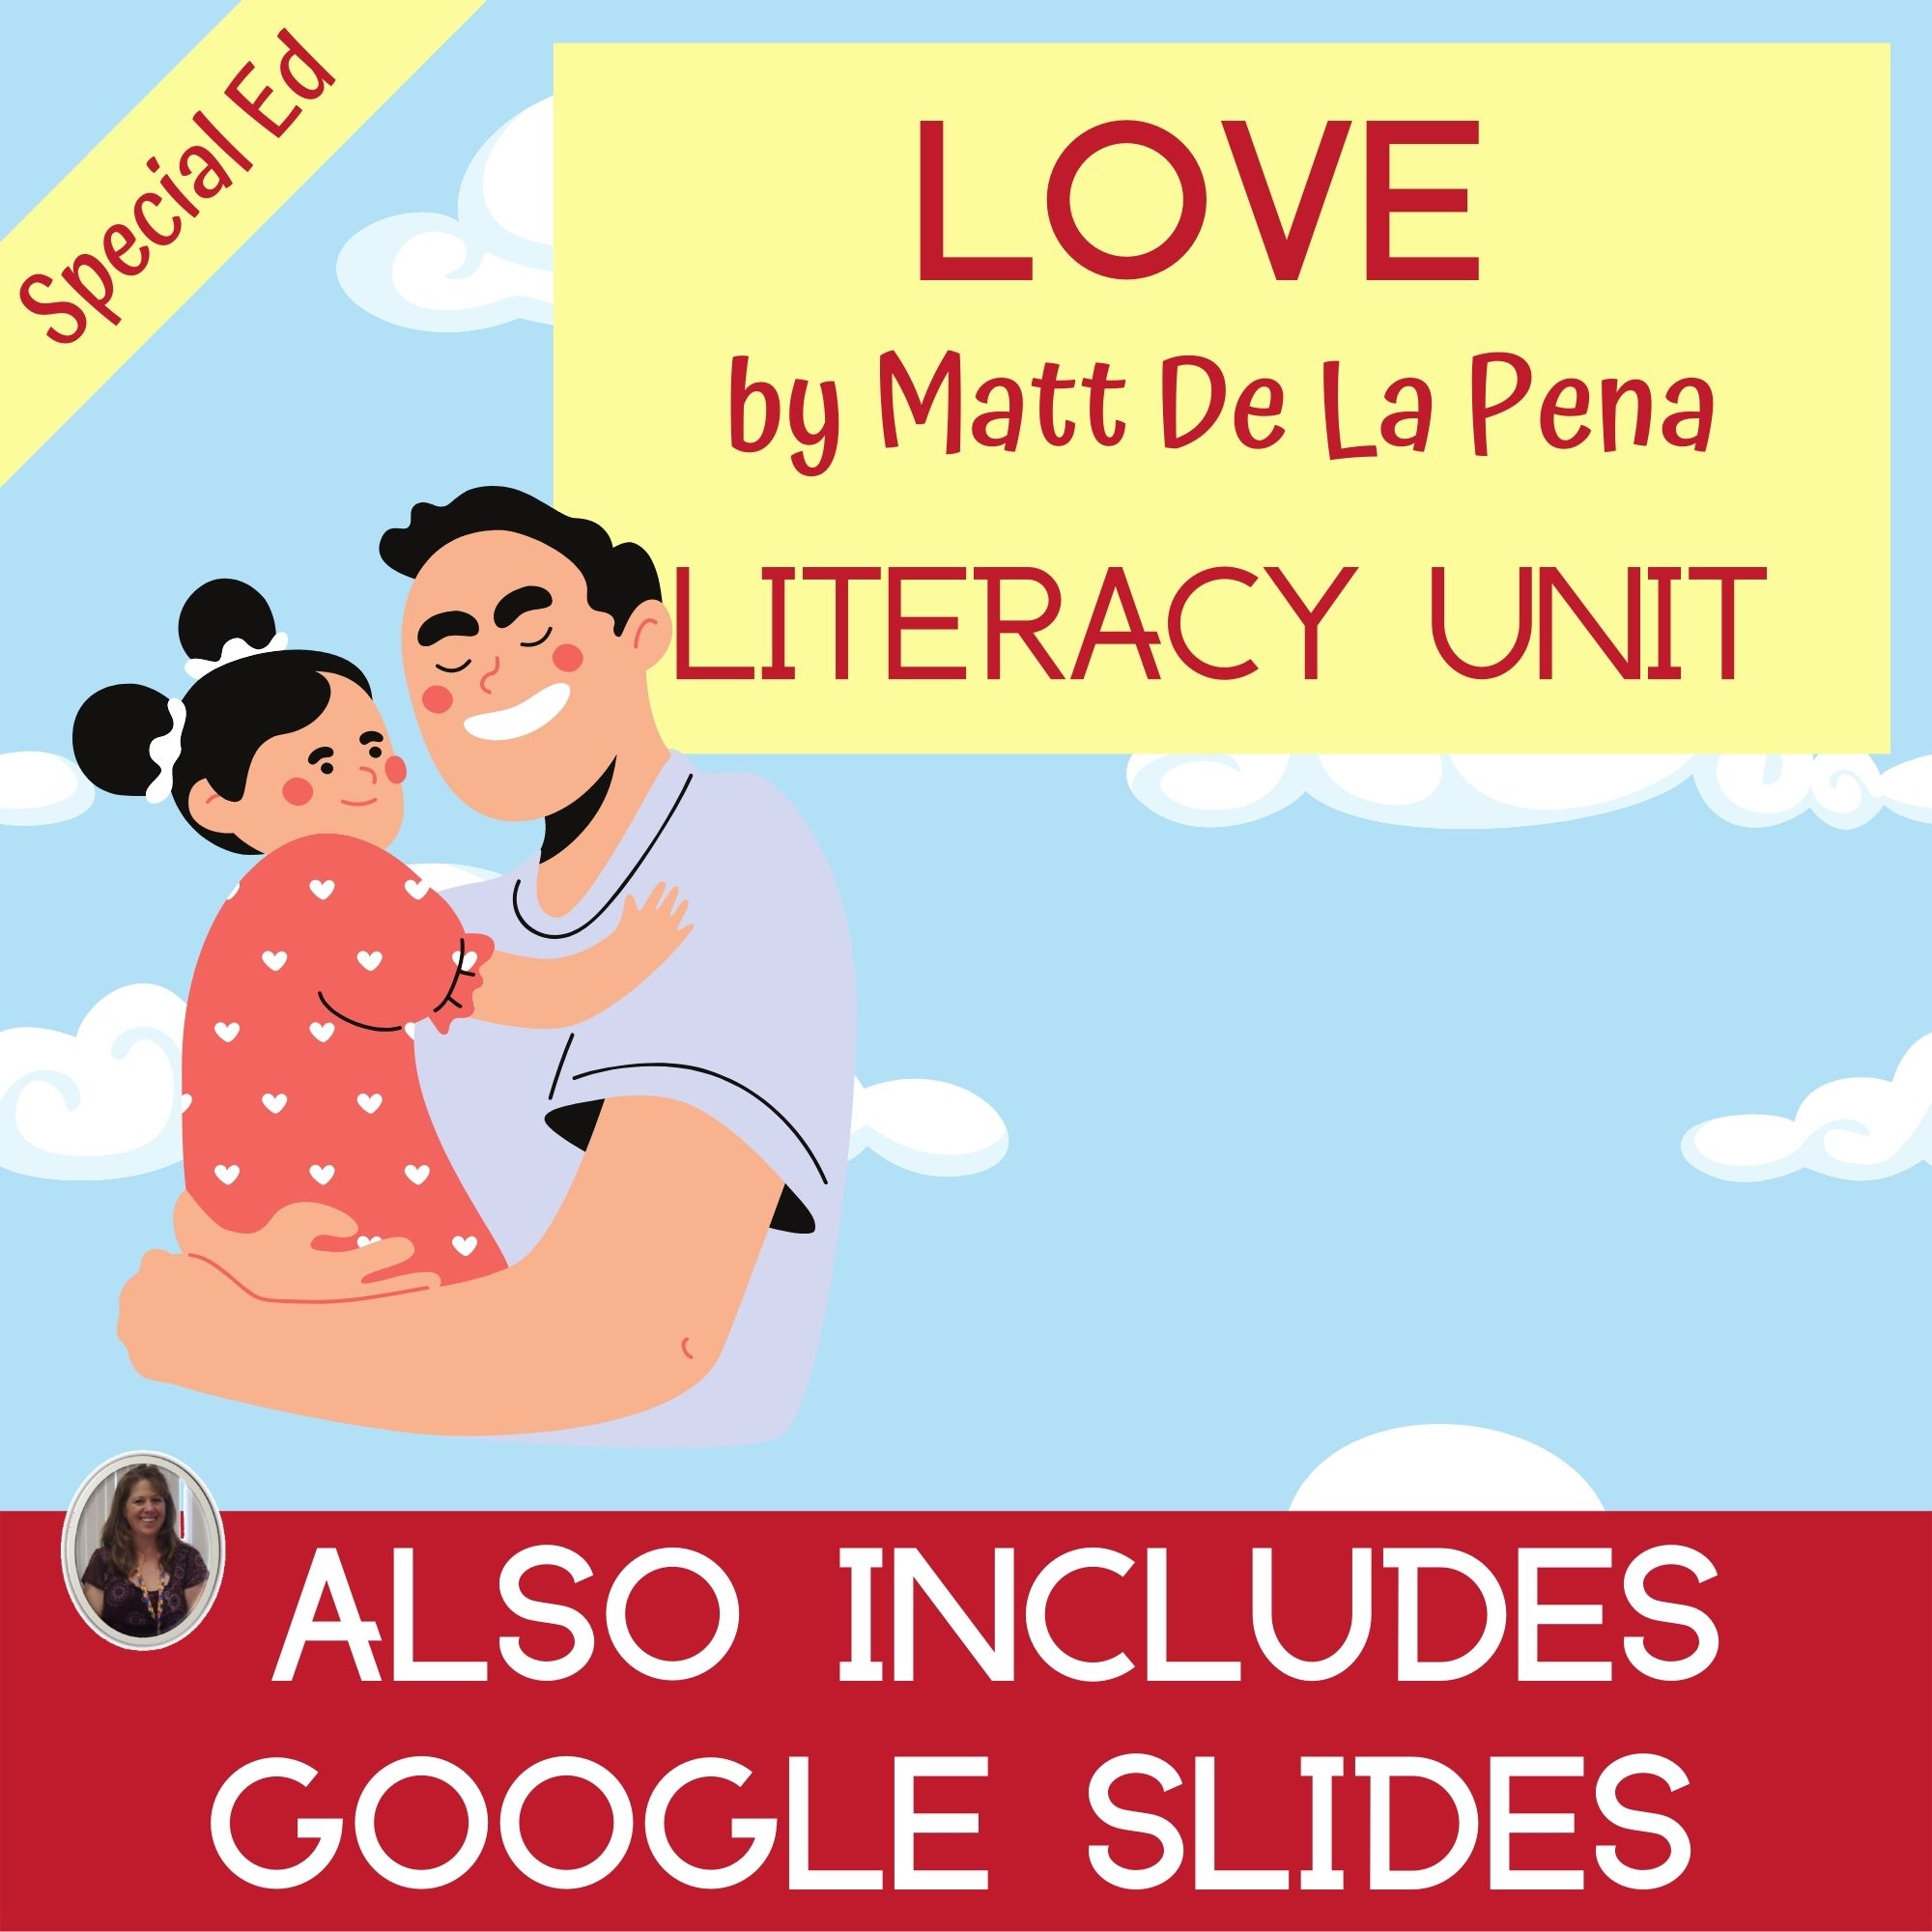 Love by Matt De La Pena Literacy Unit for Special Education